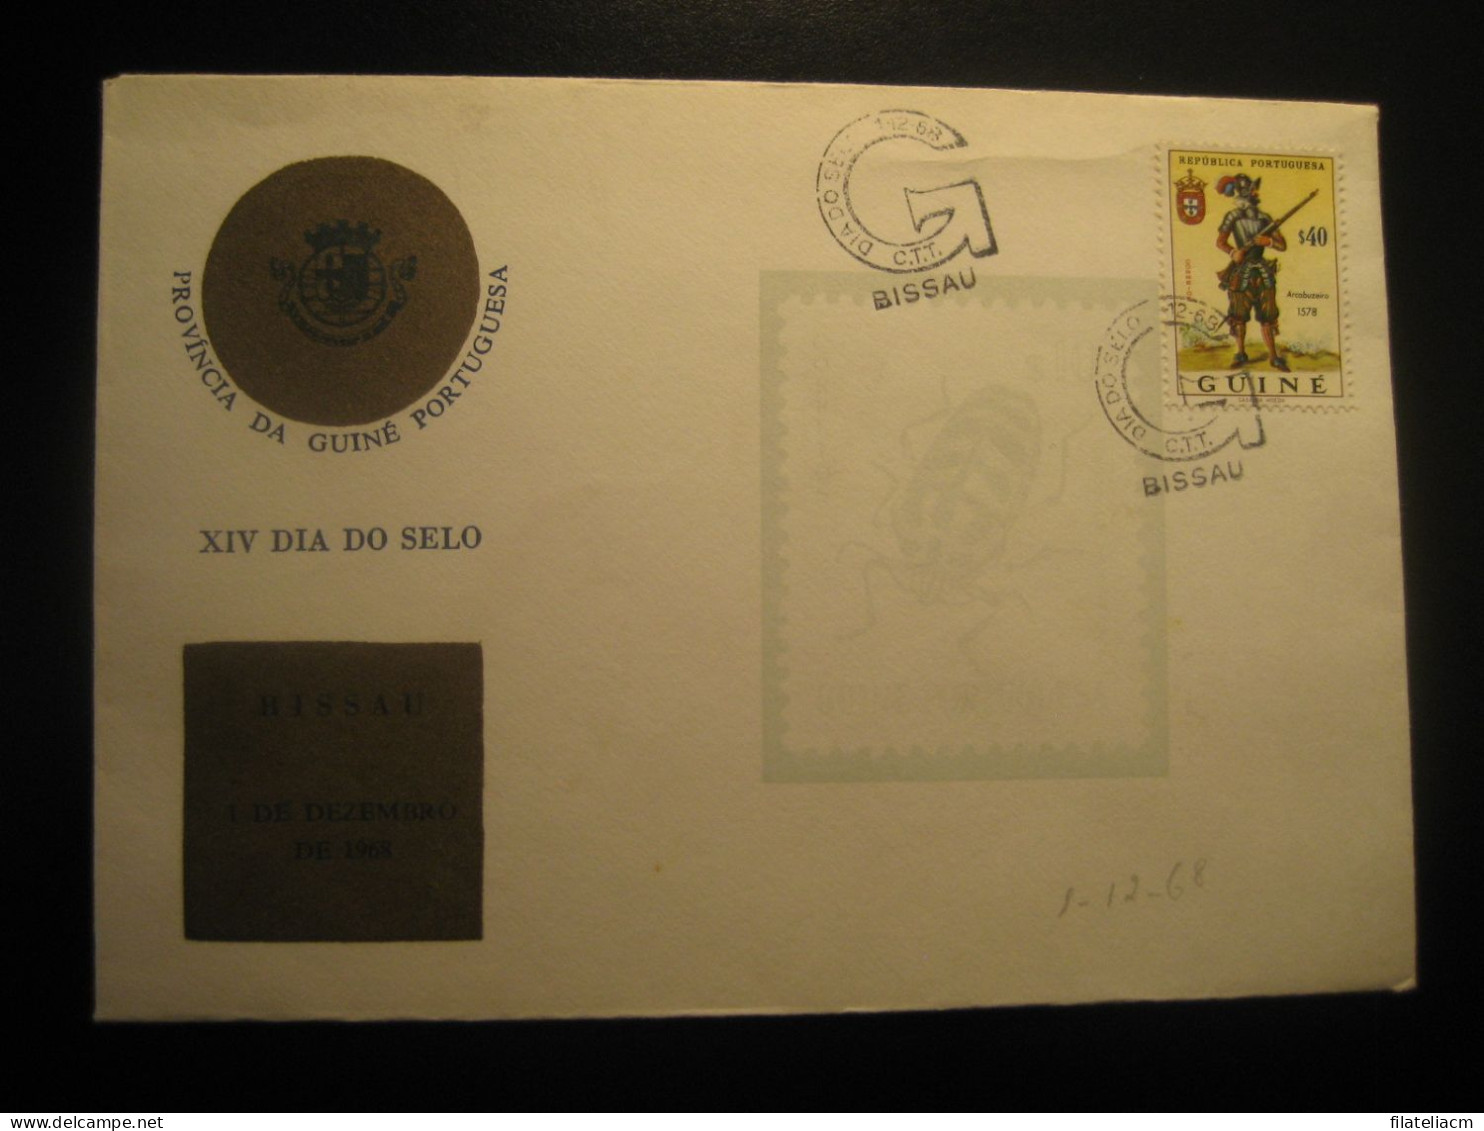 BISSAU 1968 Arcabuzeiro Stamp Dia Do Selo Cancel Cover GUINEA Portuguese Colonies Portugal Area - Guinea Portuguesa